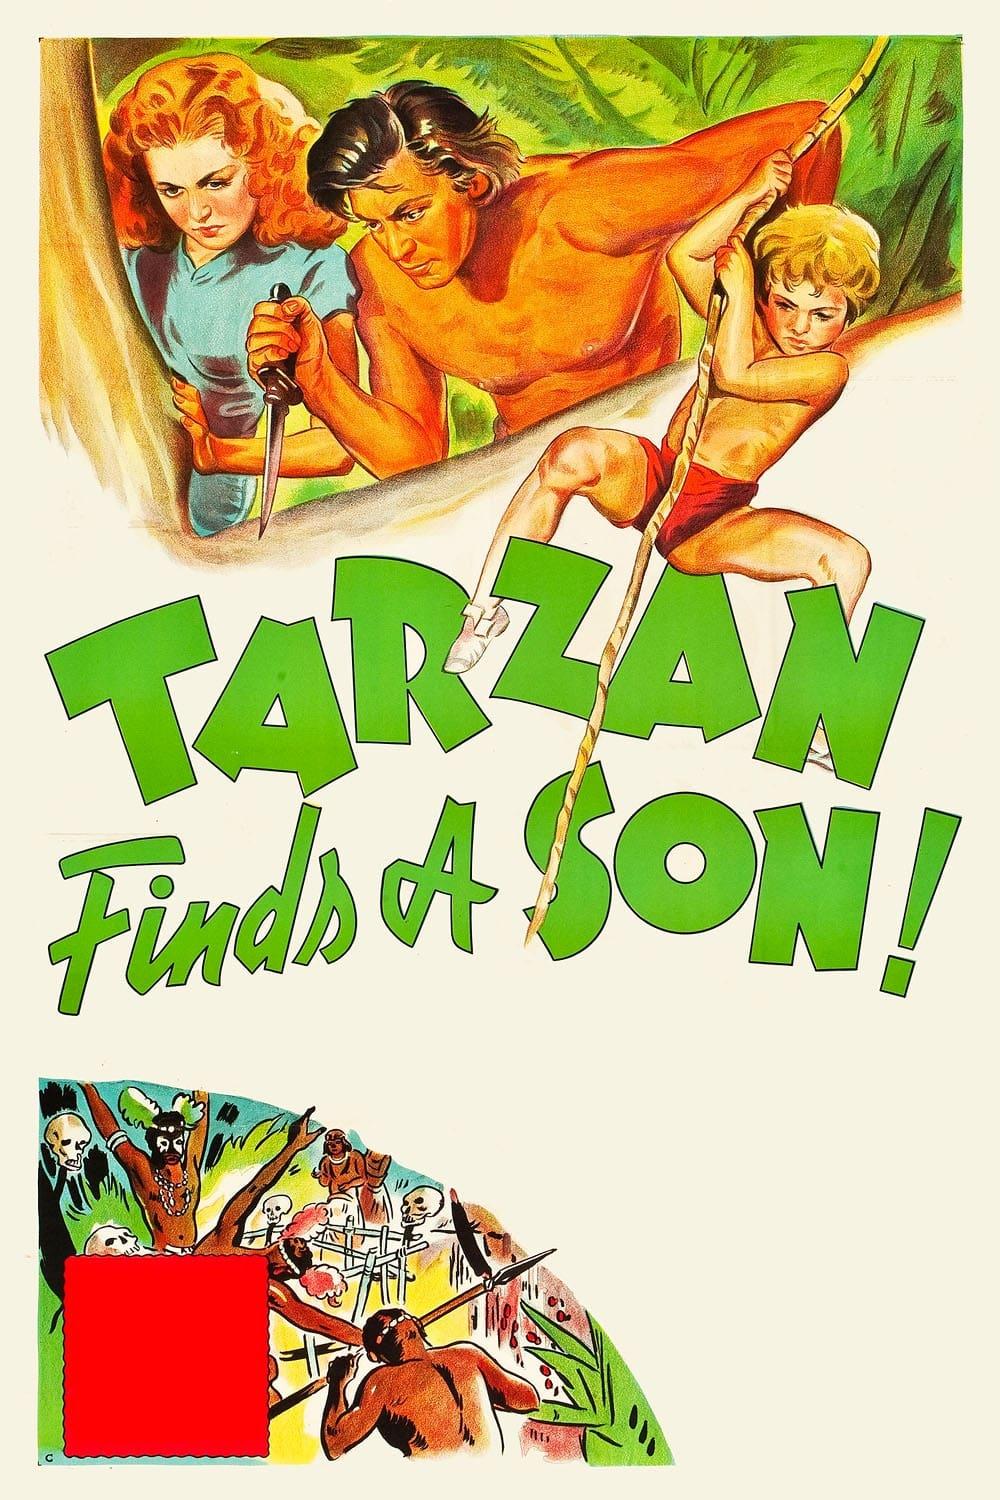 Tarzan Finds a Son! poster